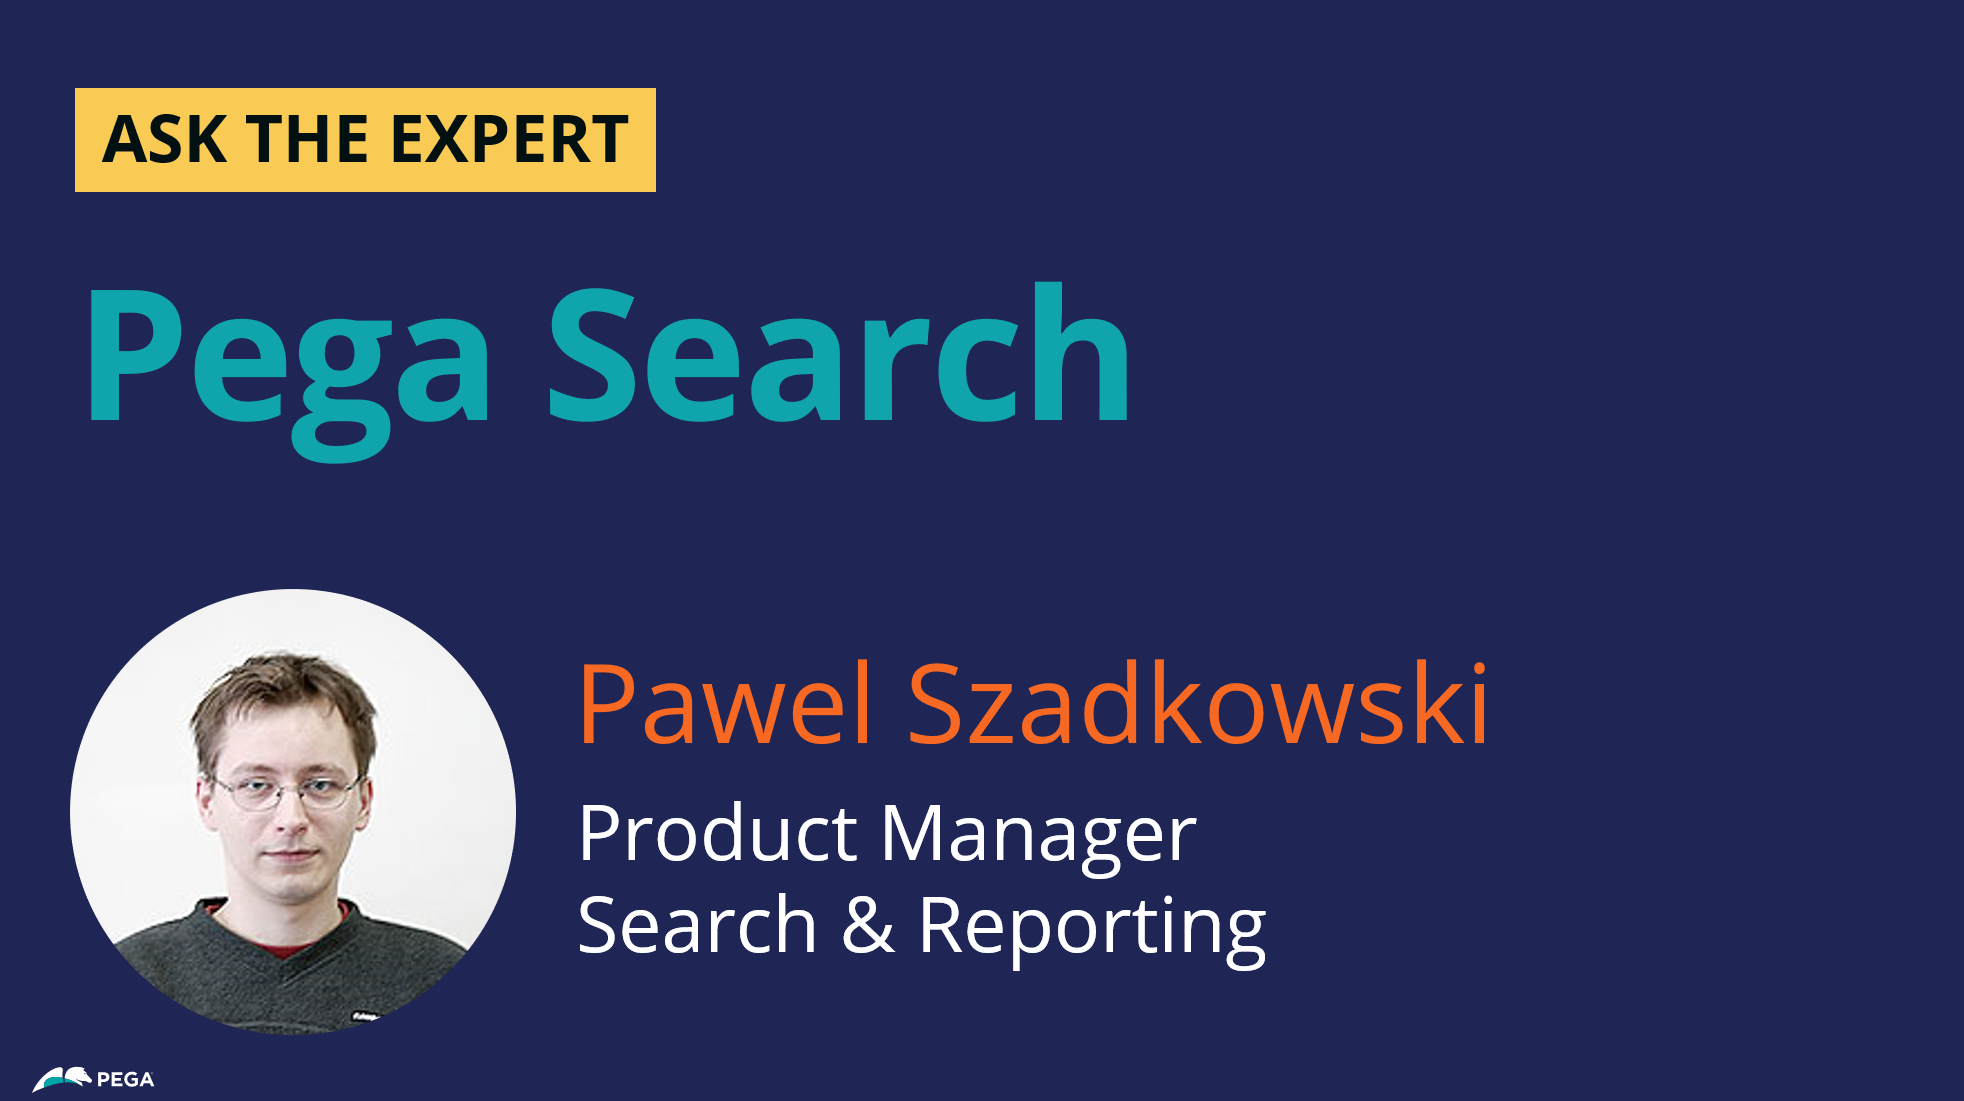 Ask the Expert - Pega Search with Pawel Szadkowski